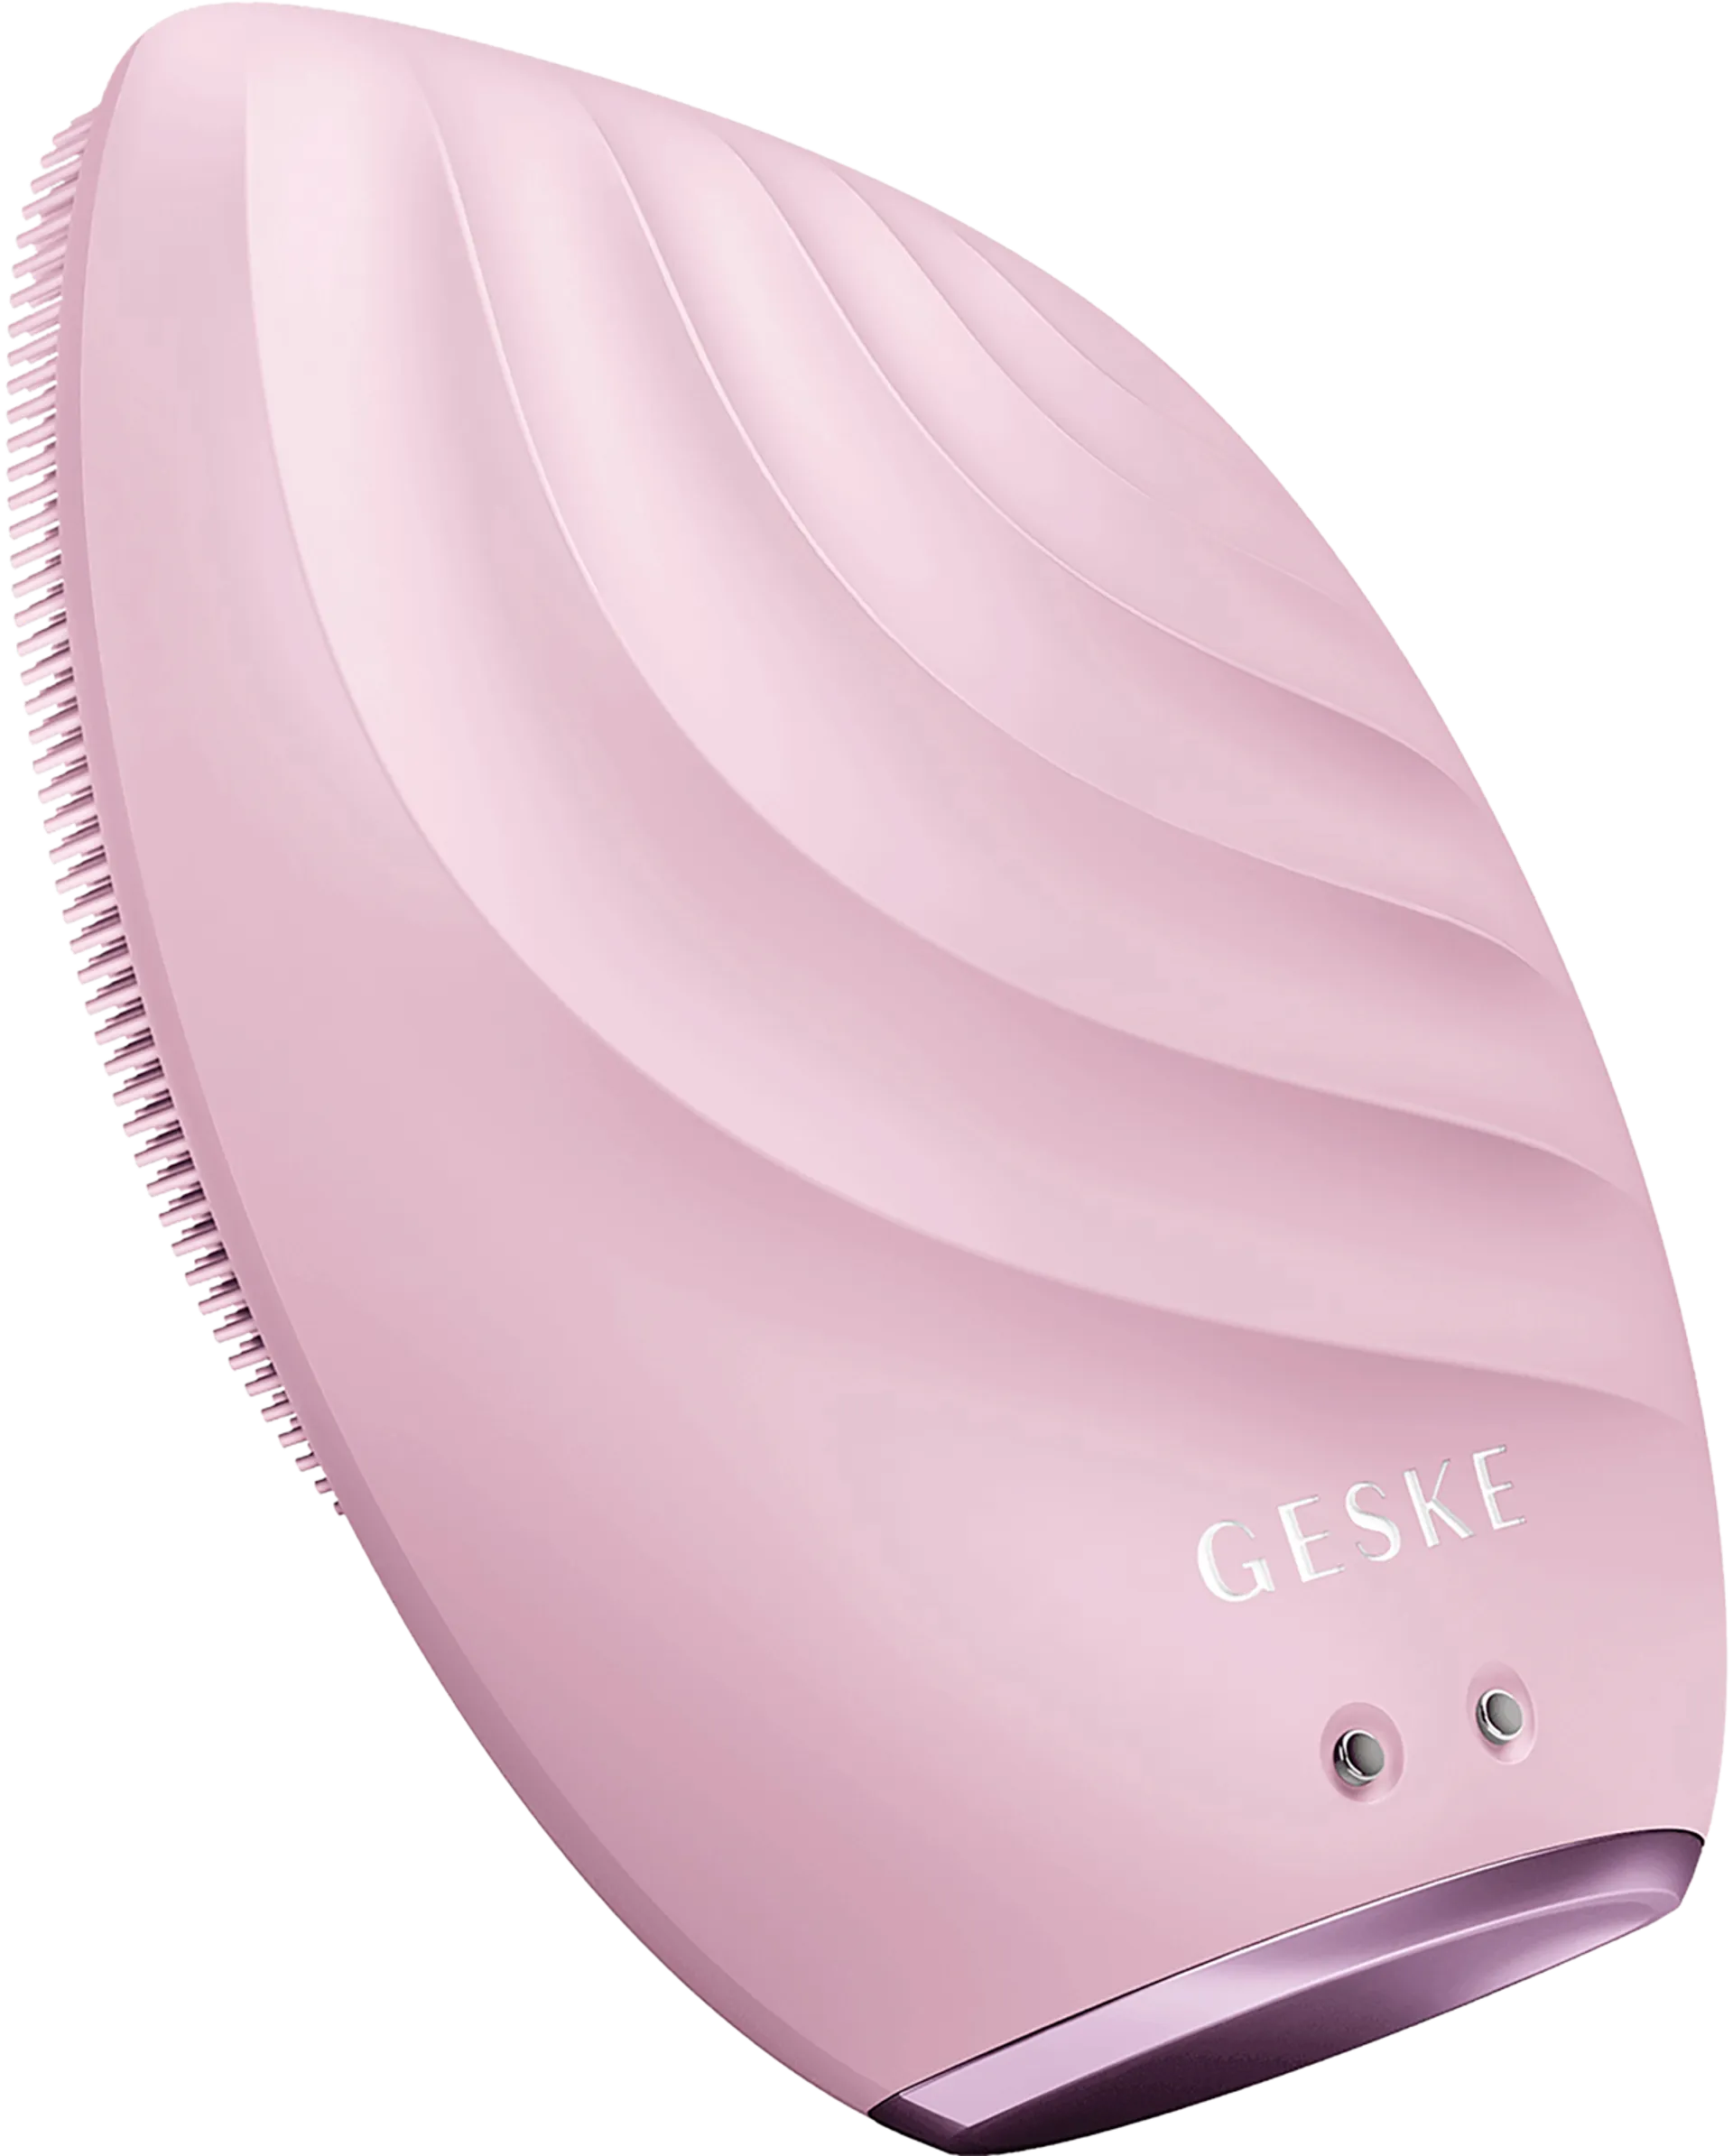 GESKE Sonic Facial Brush 5 in 1 Pink kasvojen puhdistusharja - 3